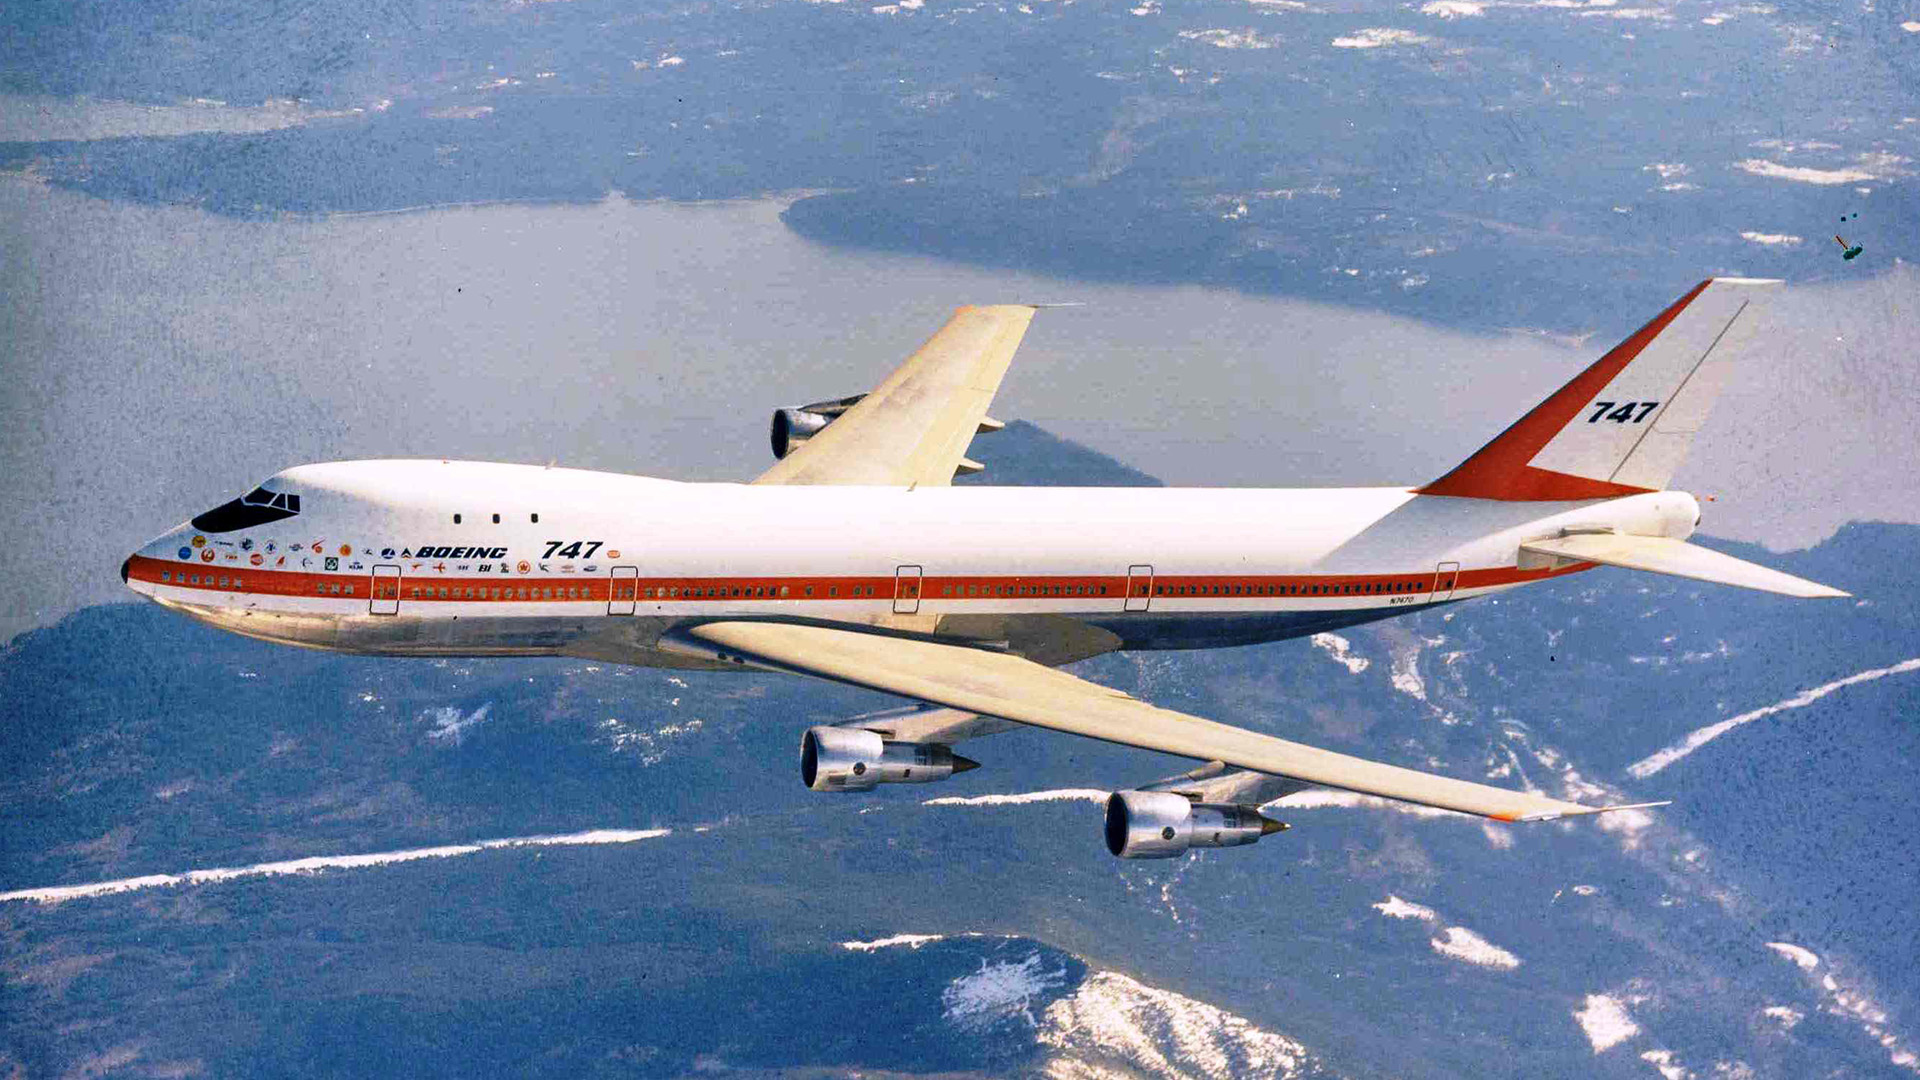 Boeing 747 Jumbo-Jet